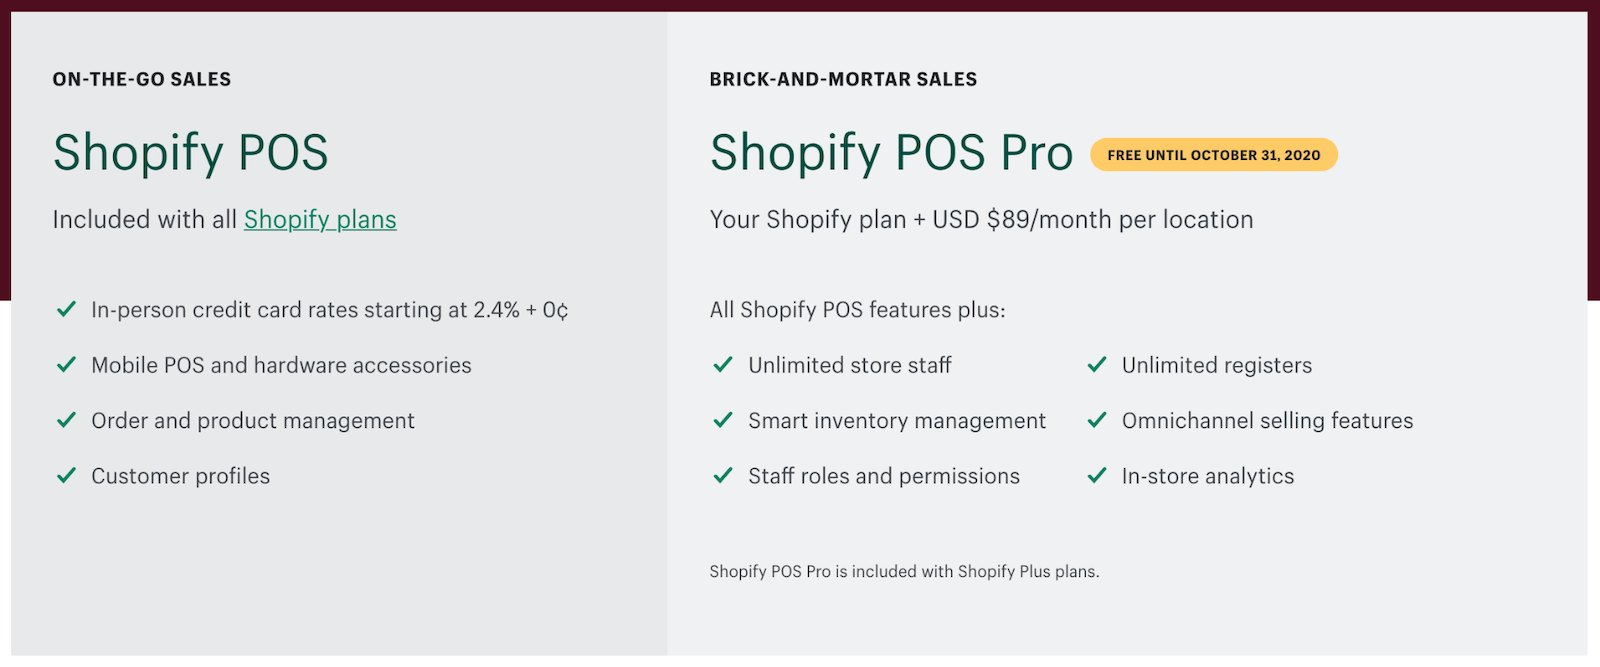 Shopify POS Pro